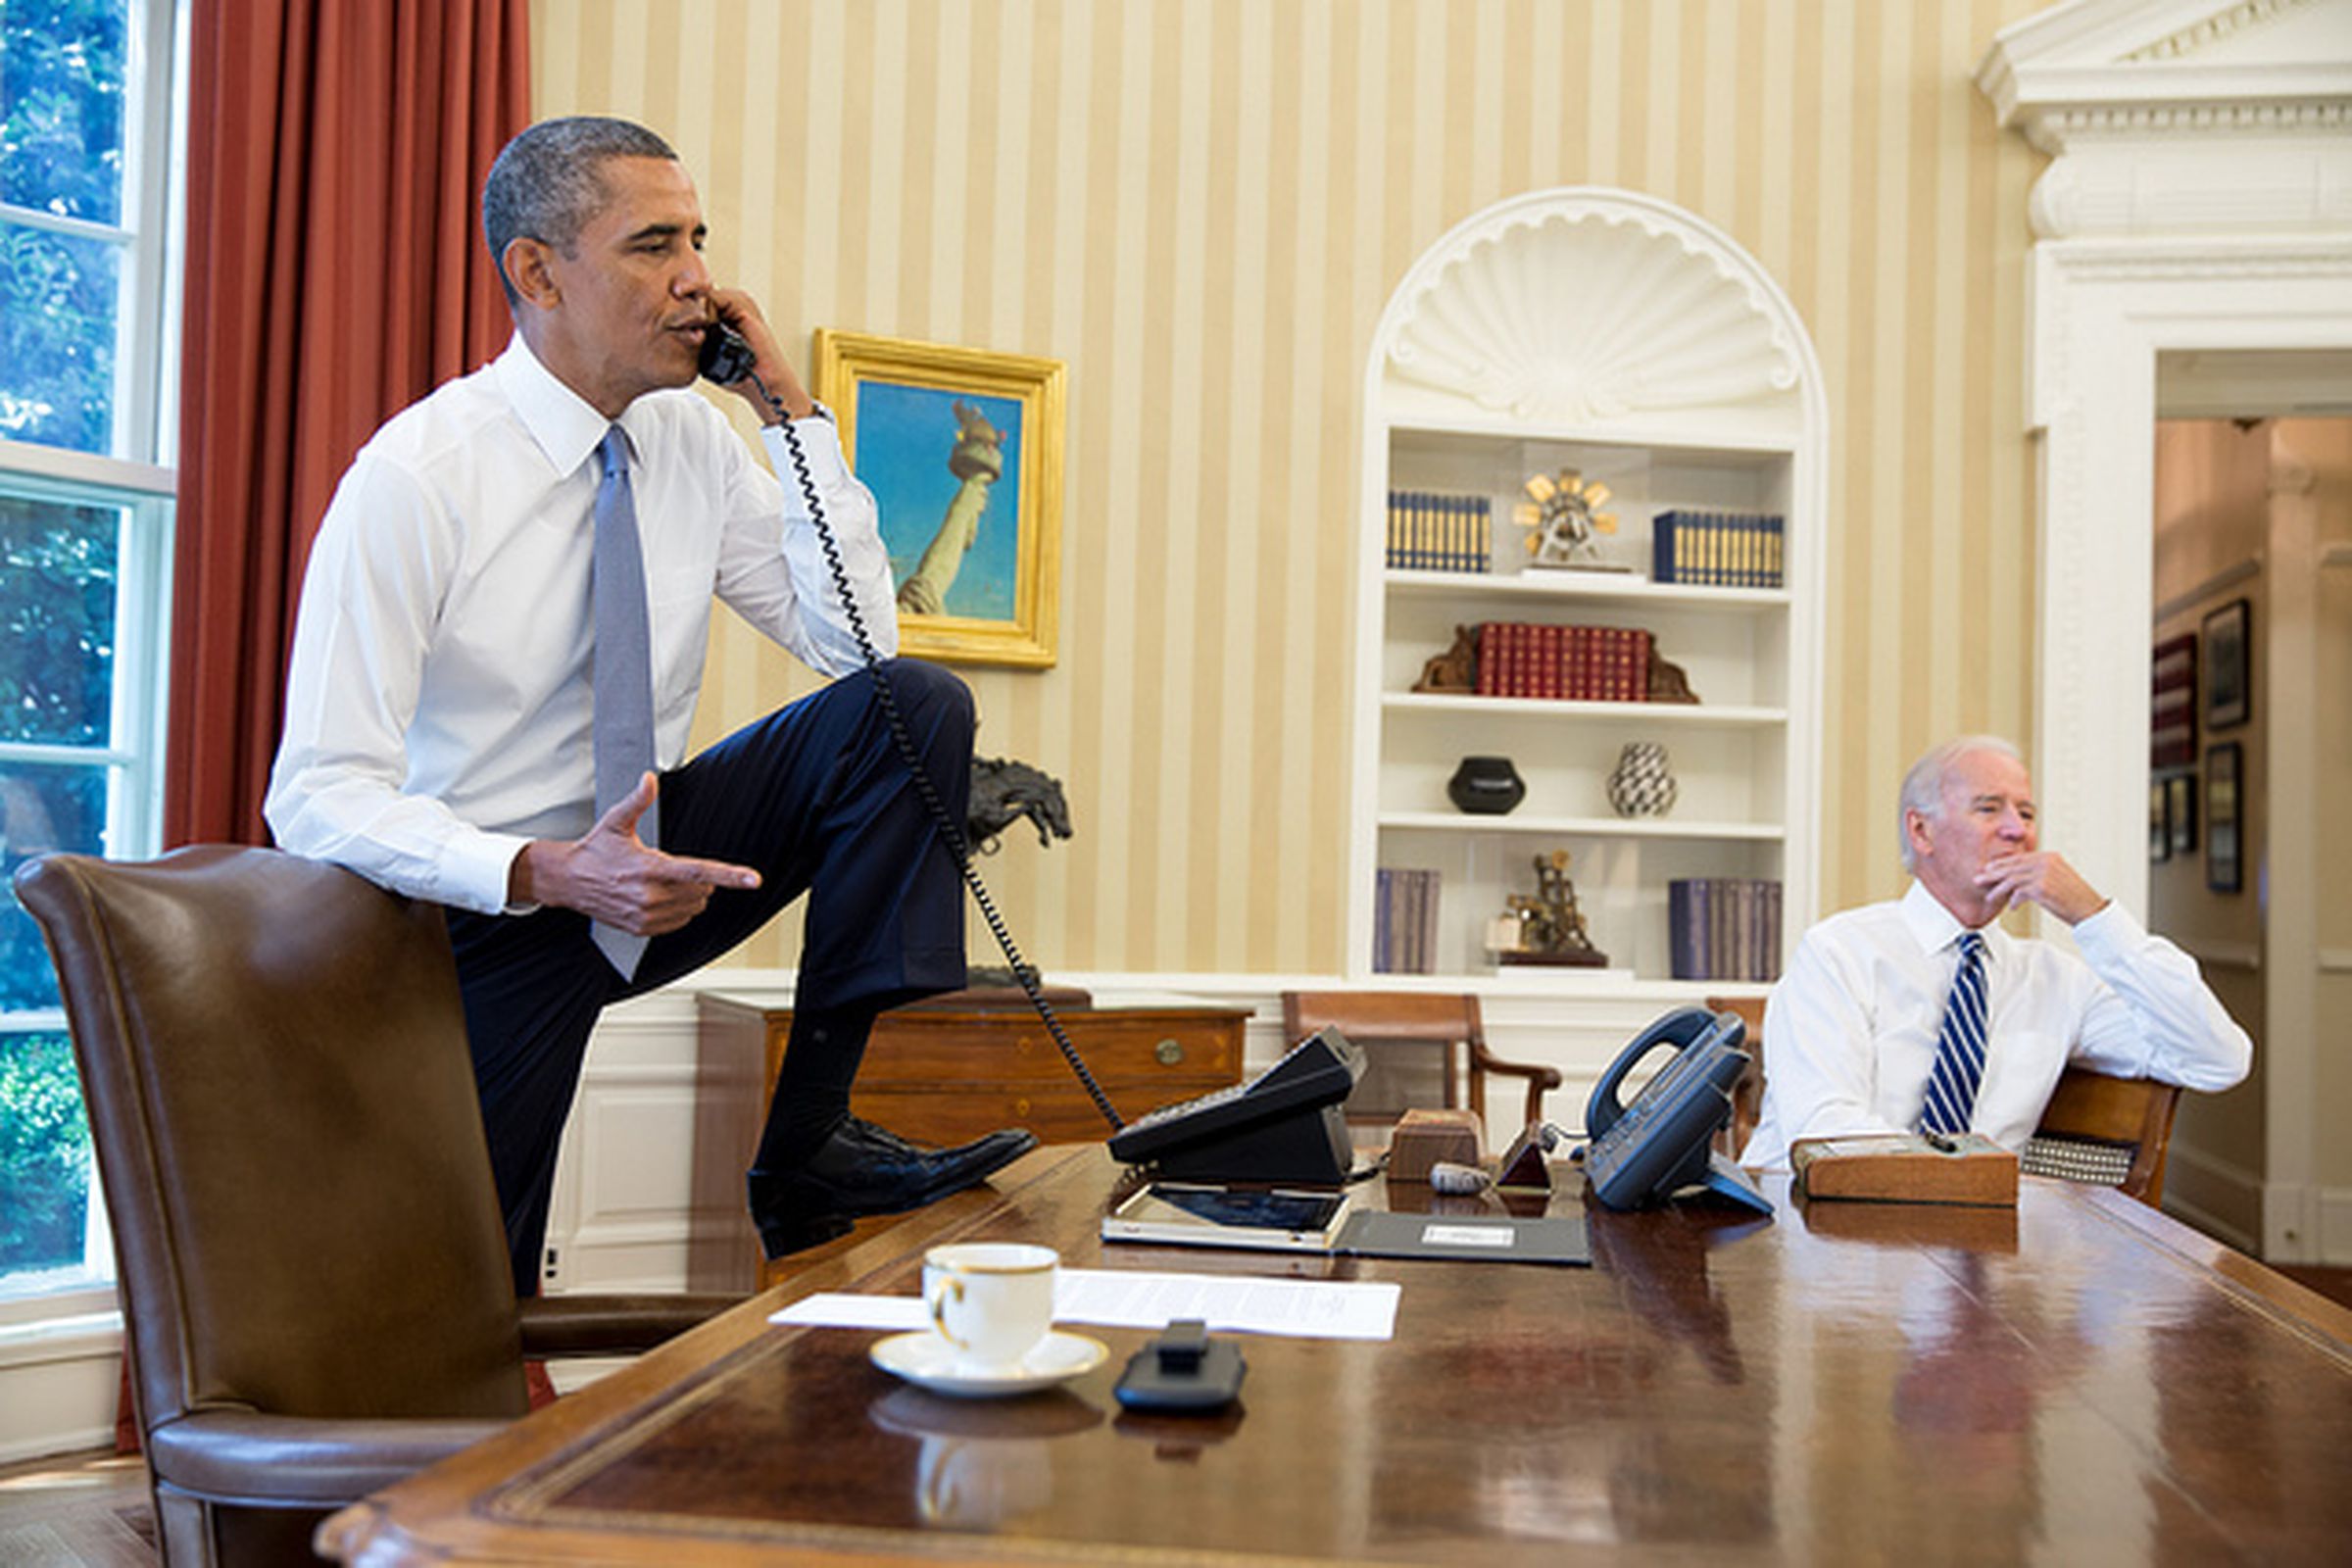 Obama stepping on desk (White House DSouza)